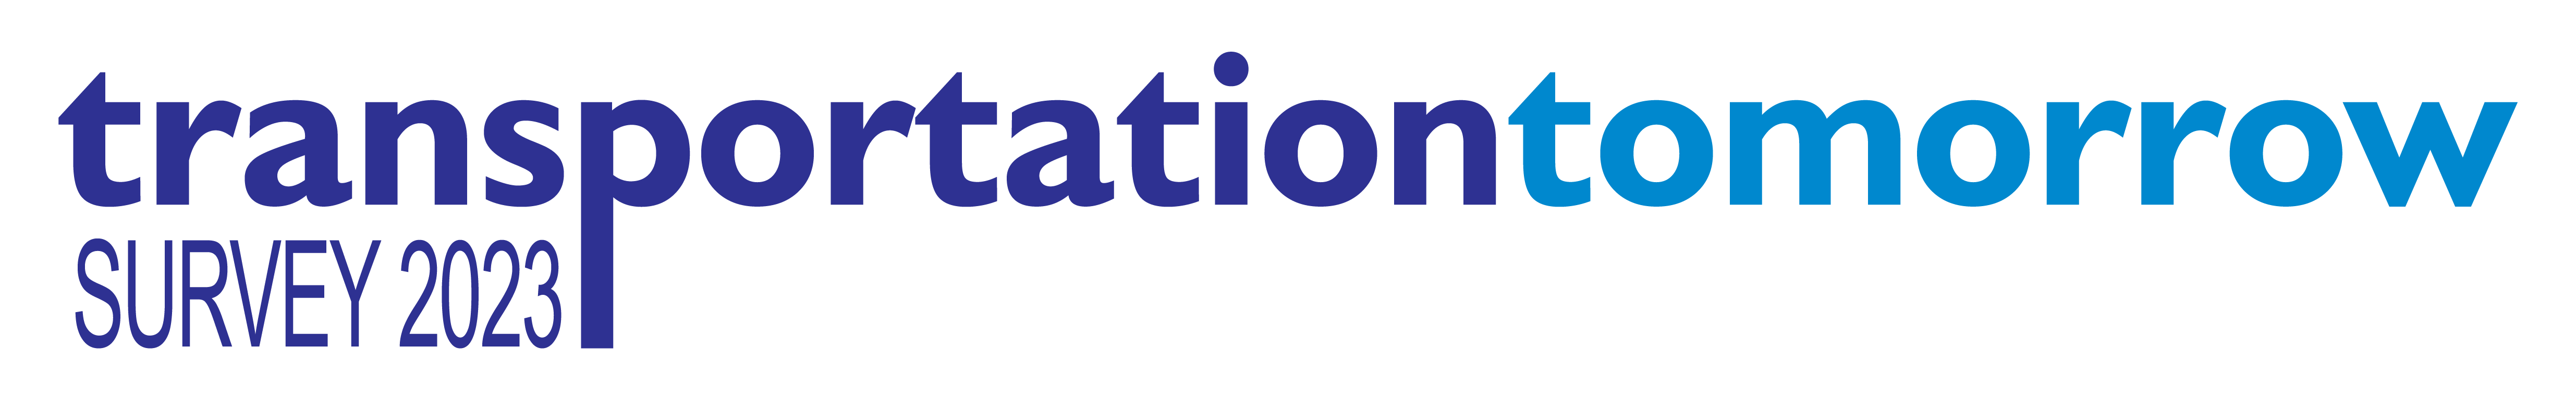 Transportation Tomorrow logo